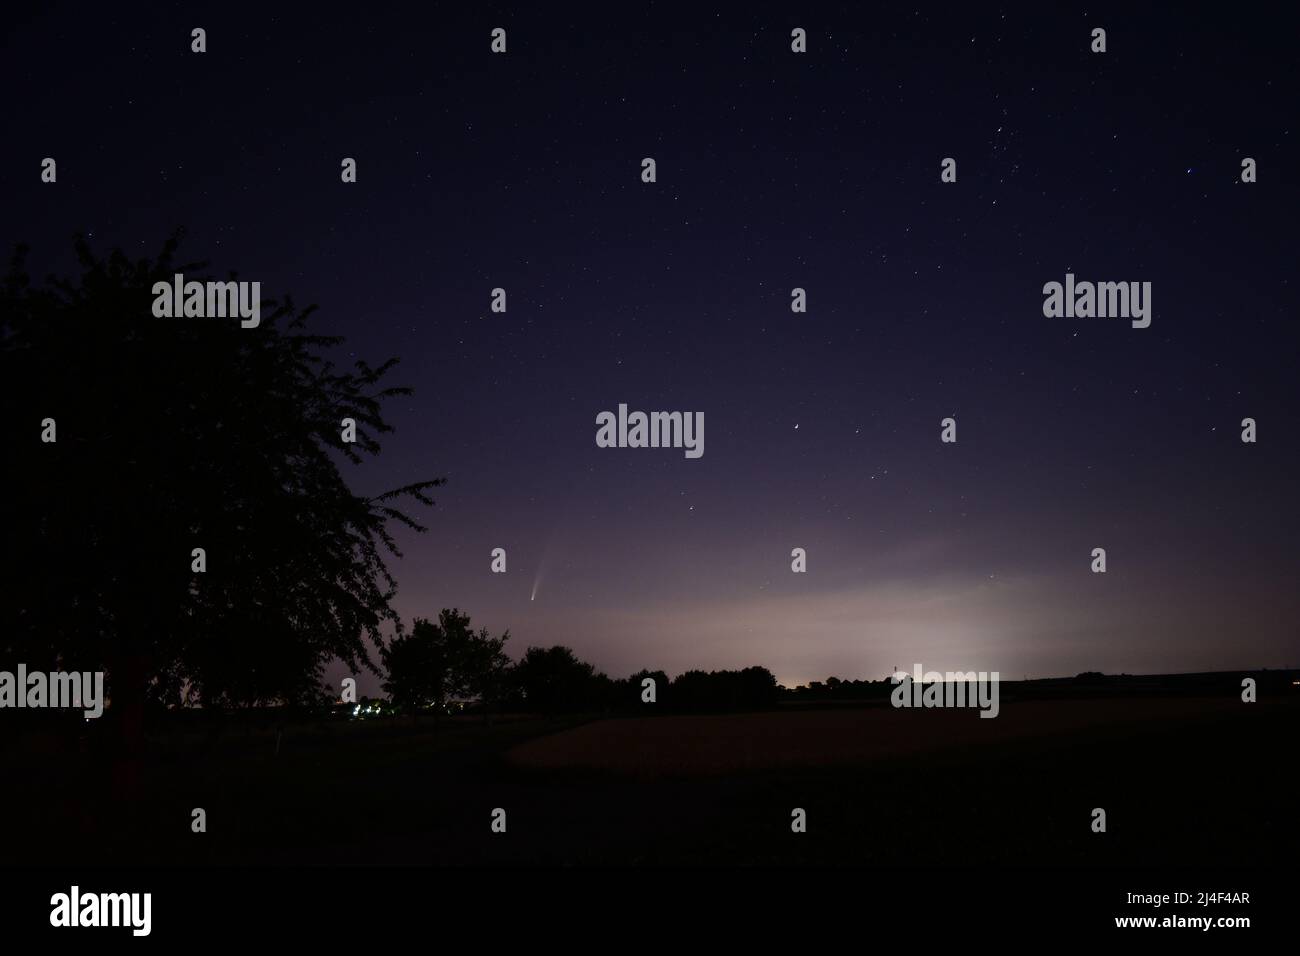 Neowise, Comet, Astronomy, Field, Night, Astrophotography, Himmelkörper, Schweif, Kometenschweif, Dunkelheit, Natur Stock Photo